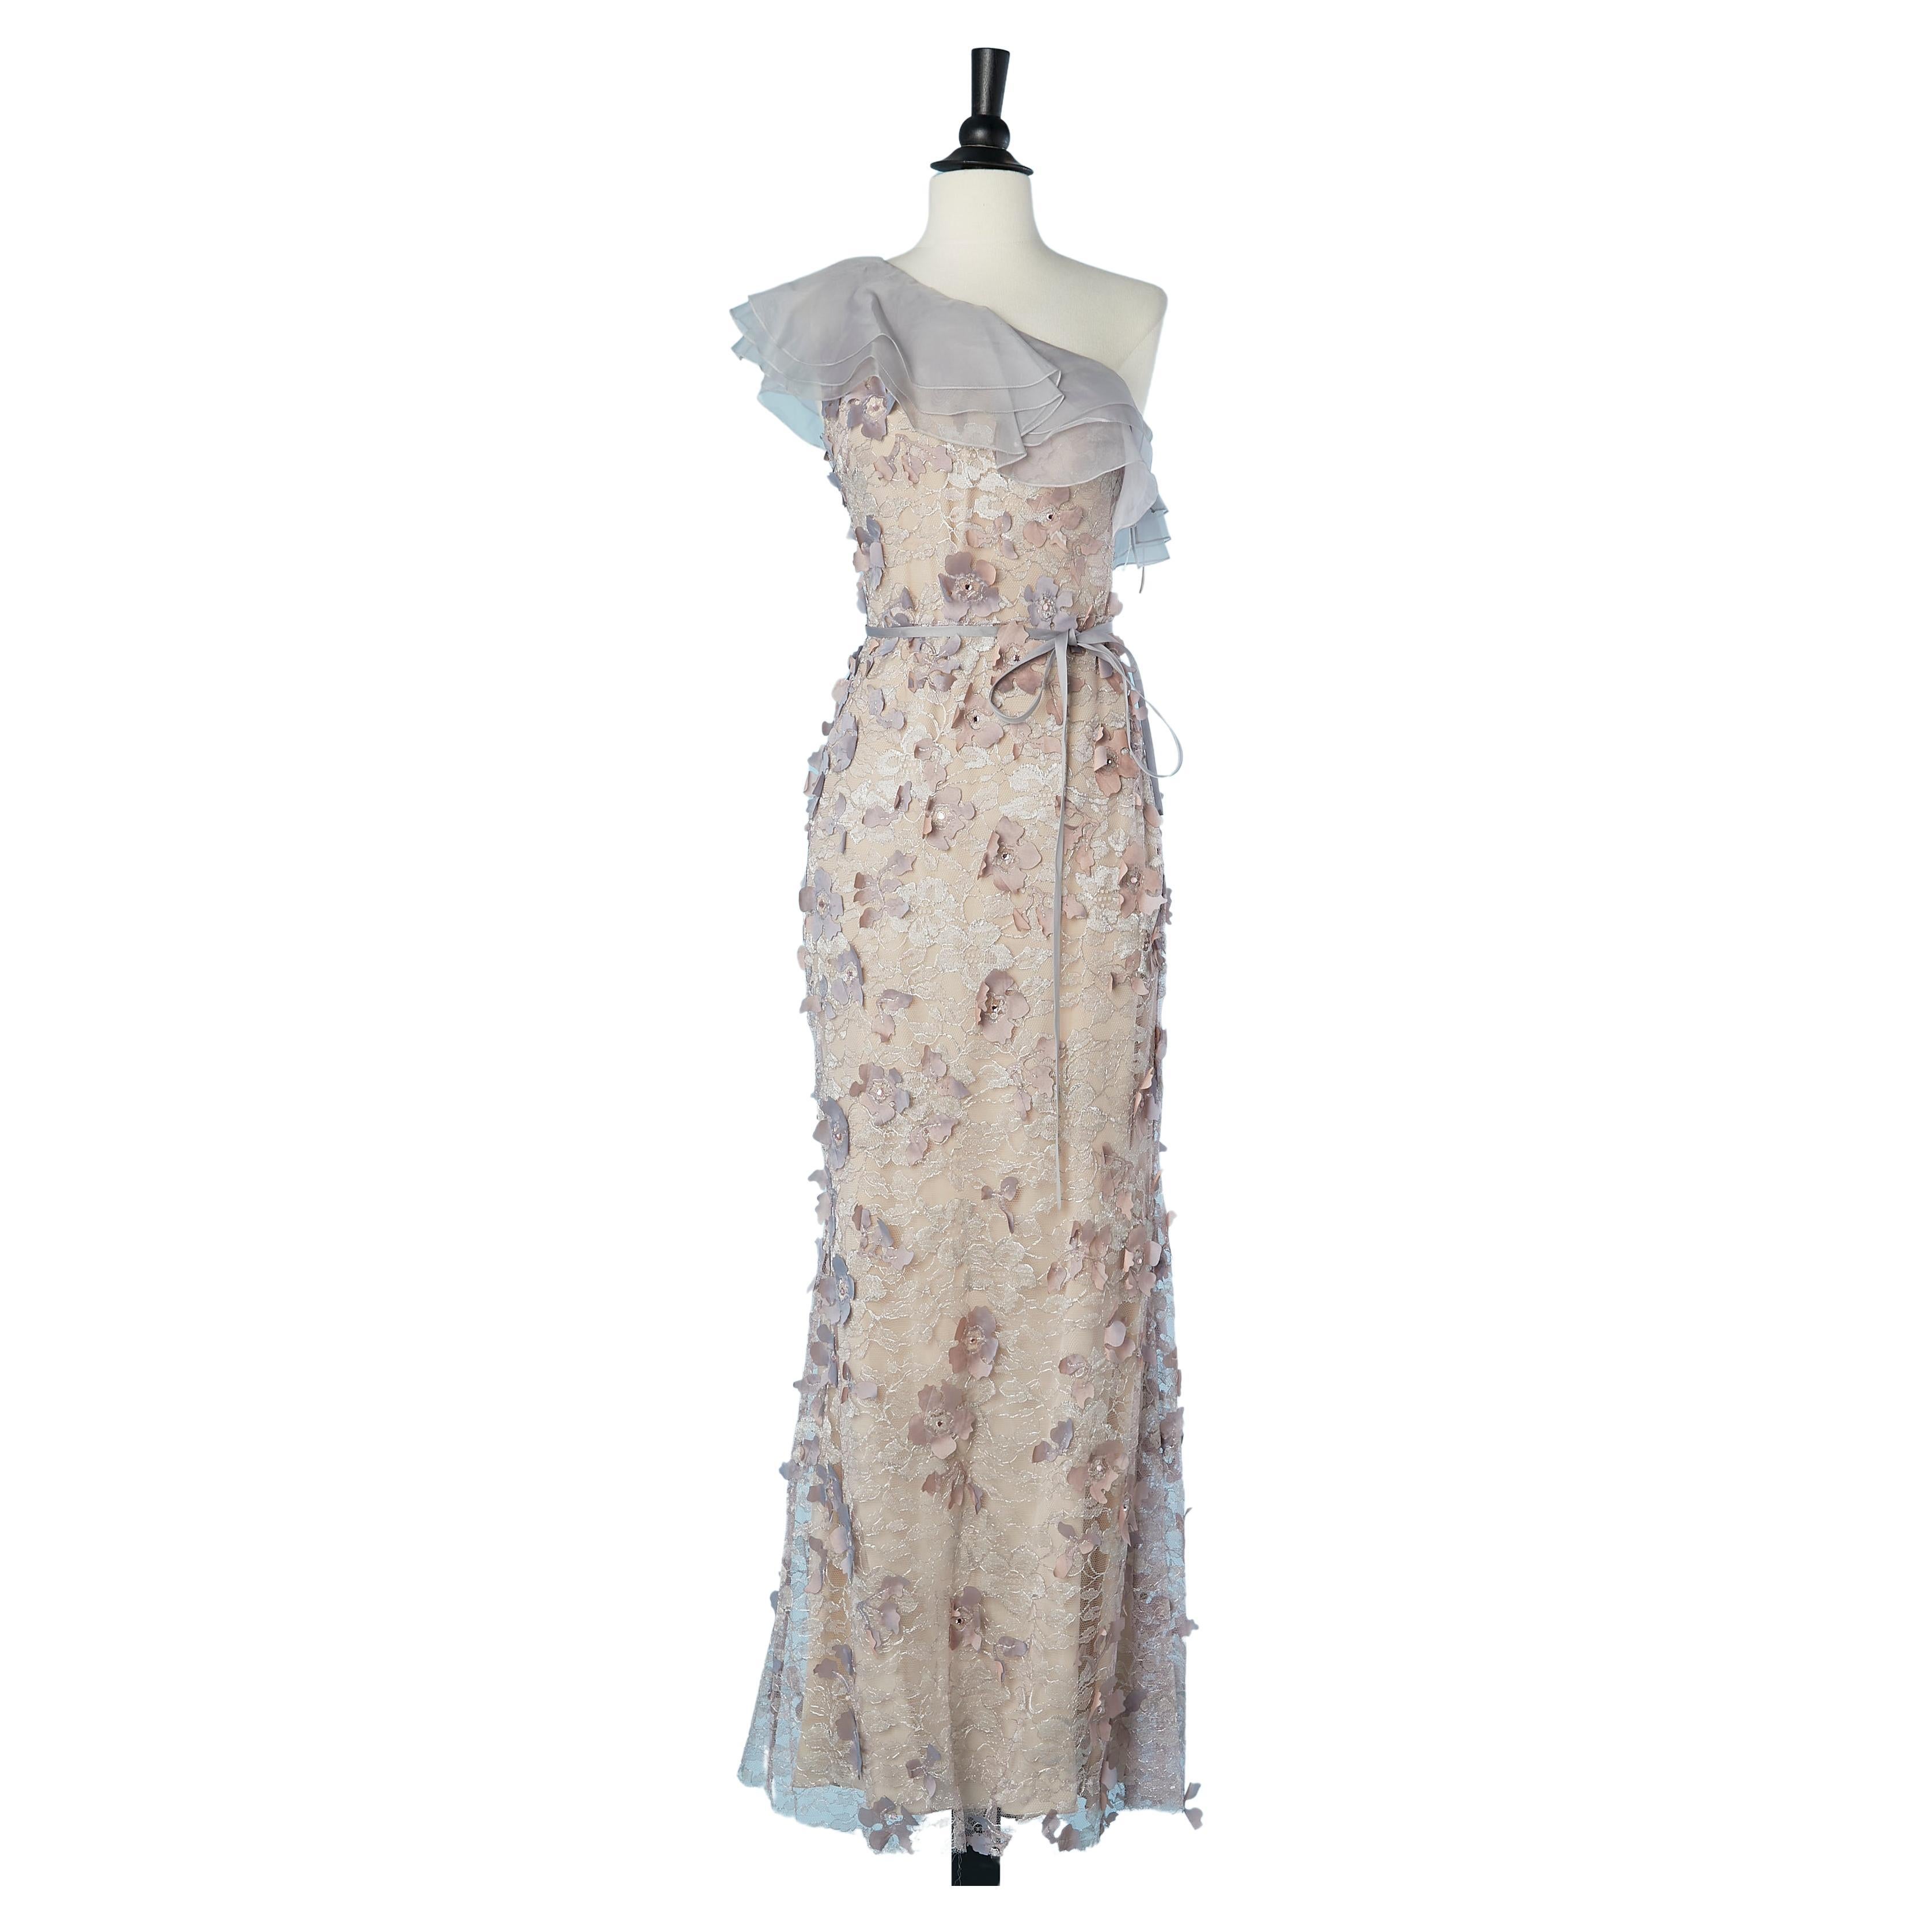 Asymmetrical pastel evening dress with flowers appliqué on lace Lorena Sarbu  For Sale